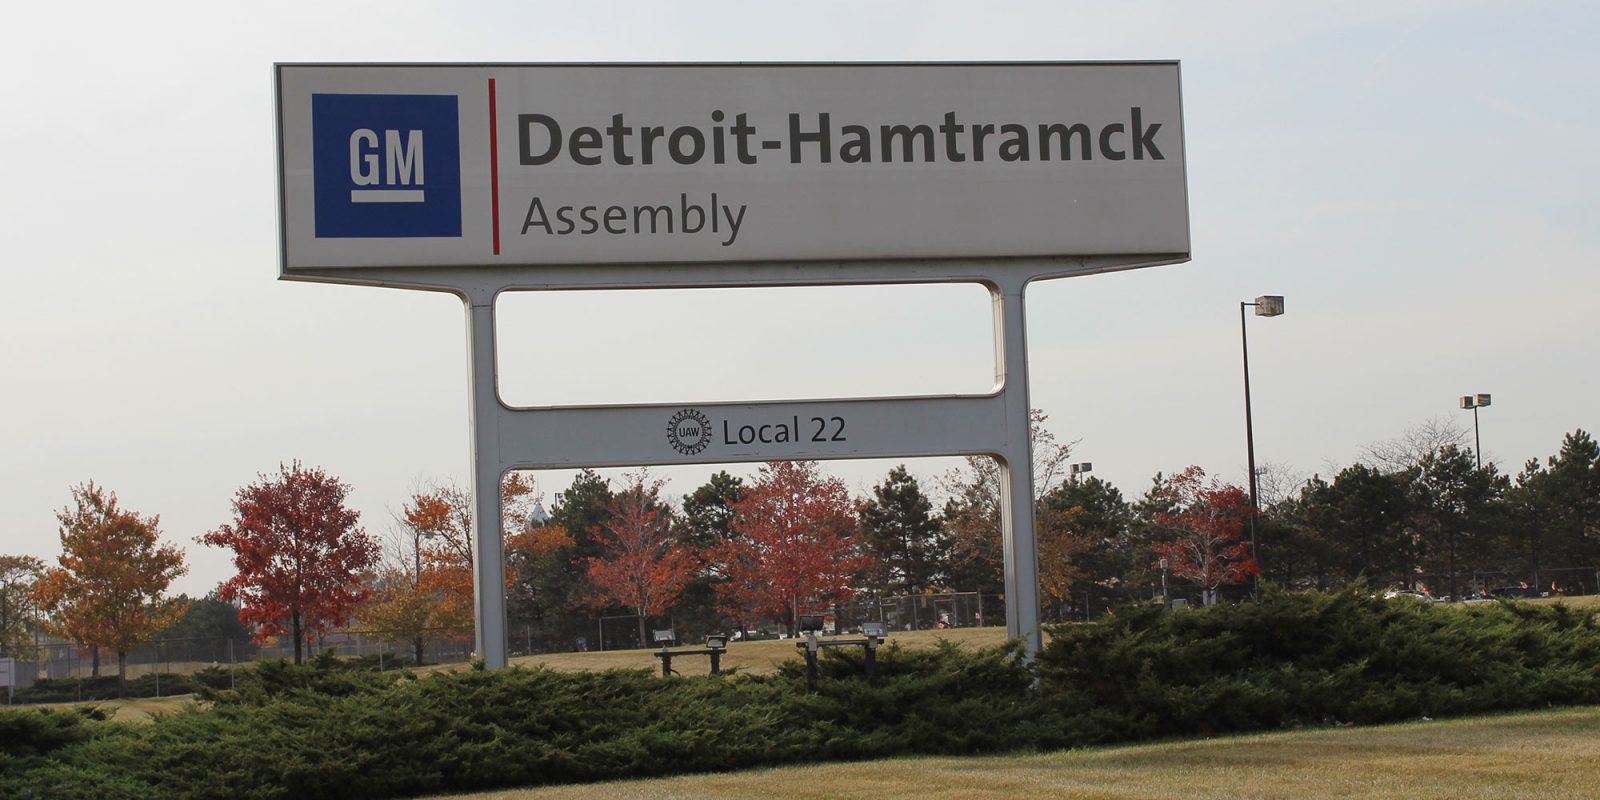 Detroit-Hamtramck